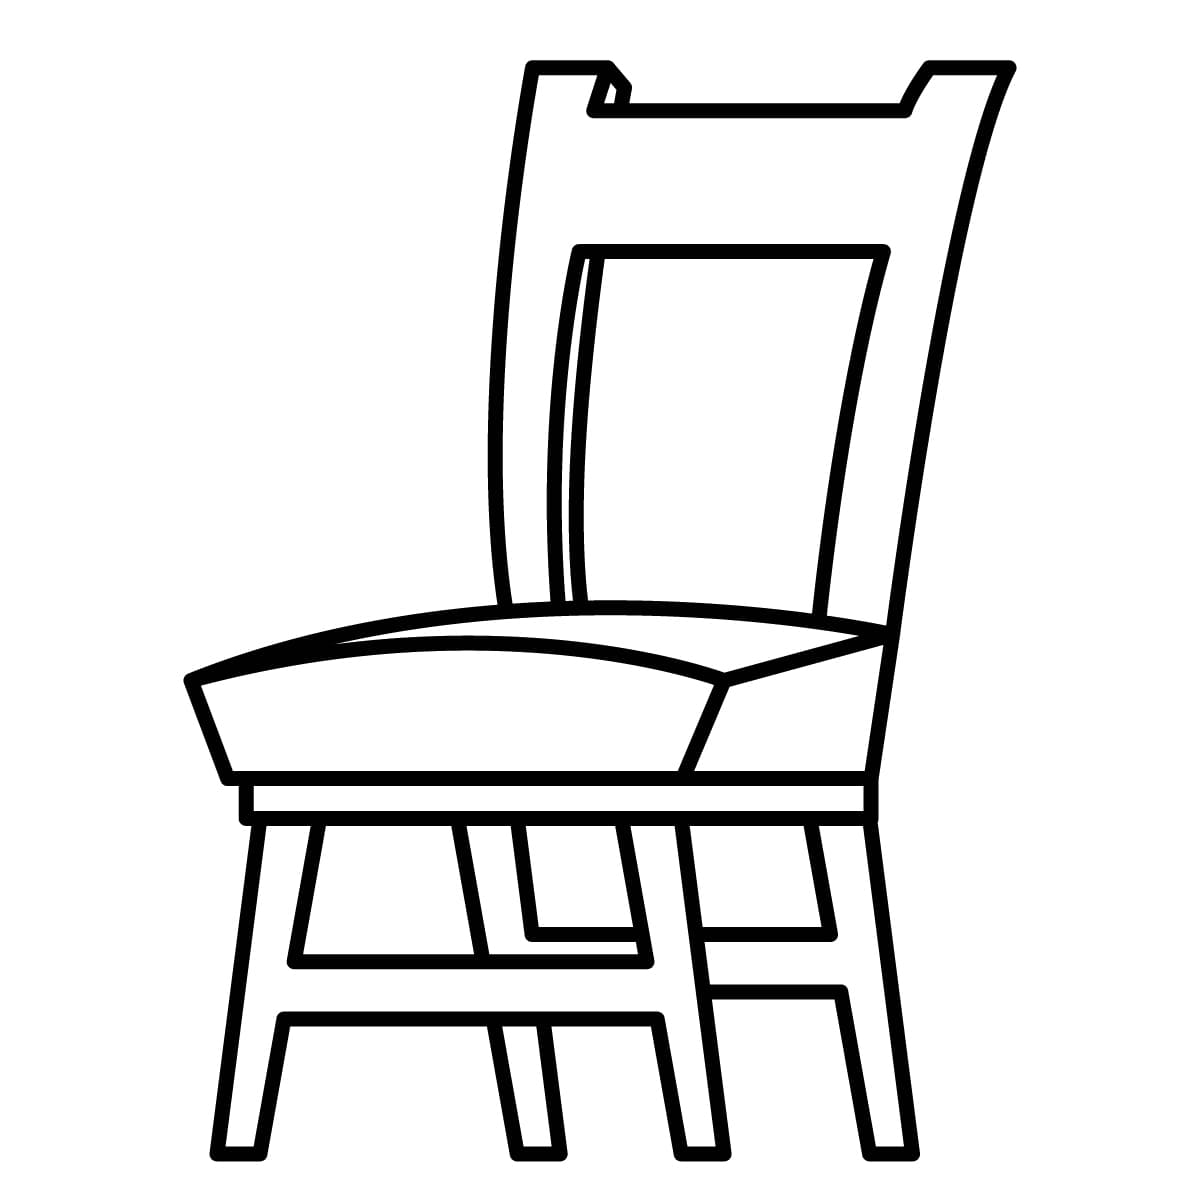 Imagen de silla para colorear